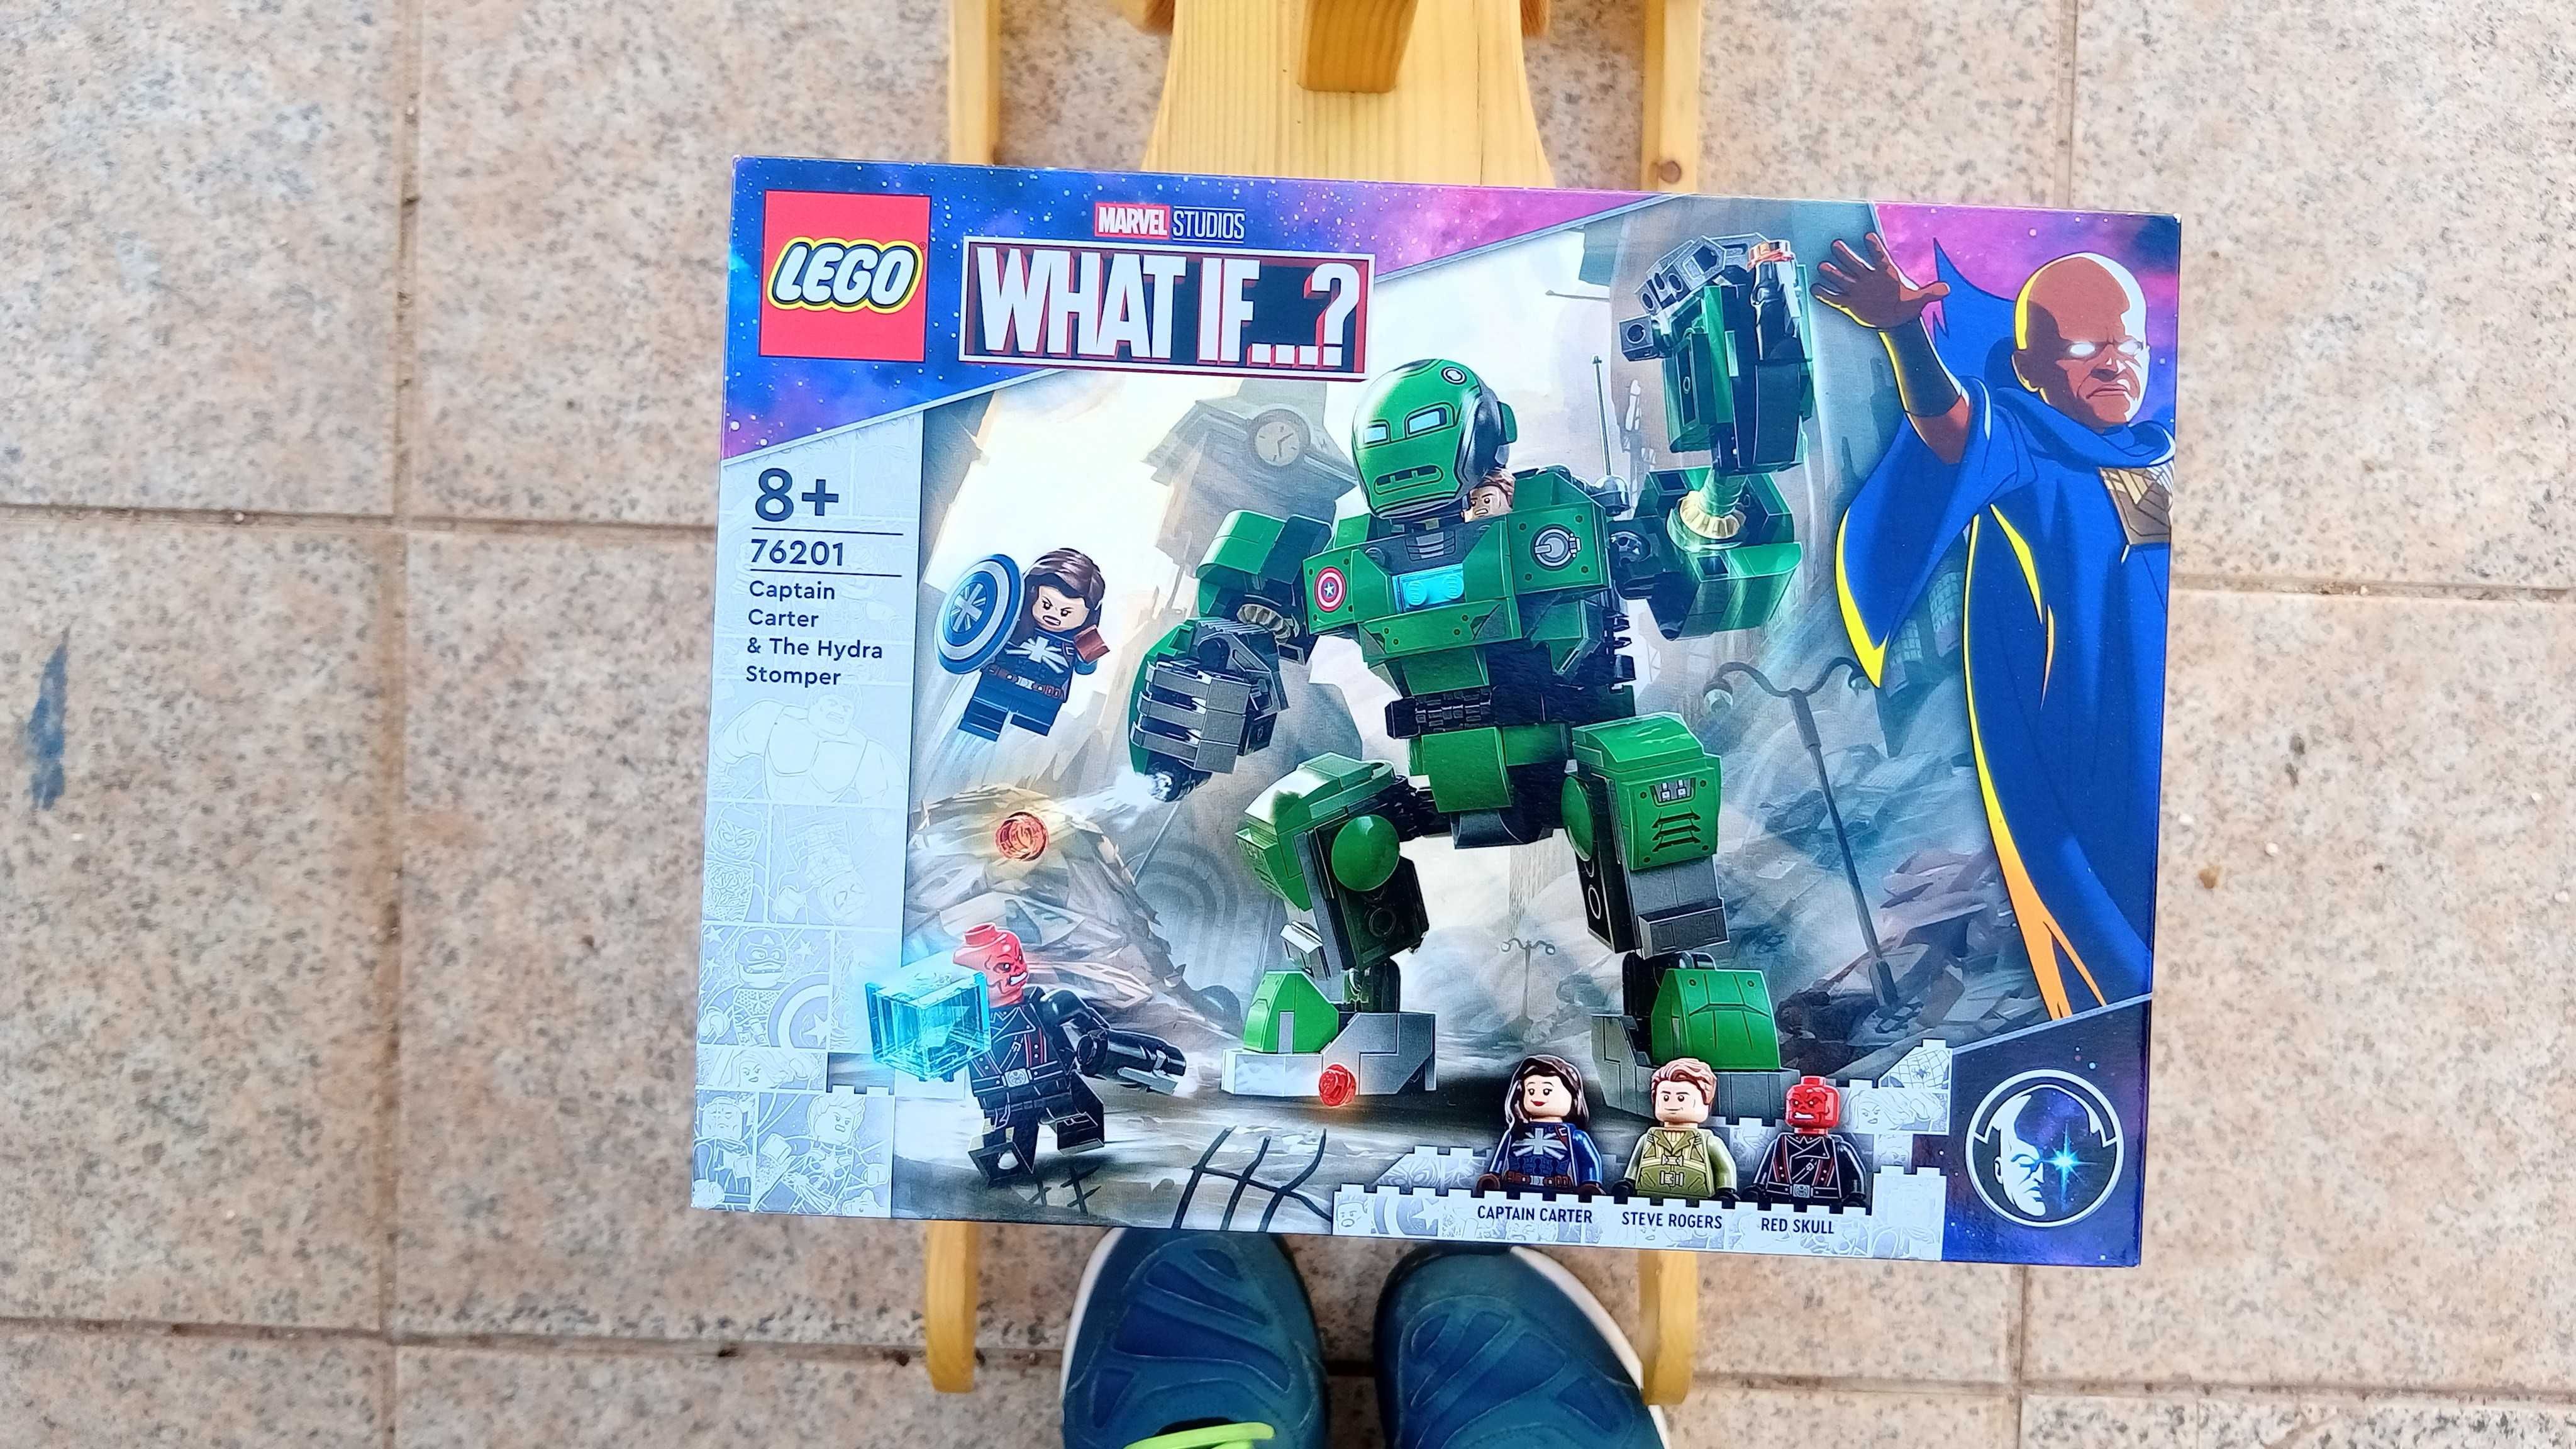 Conjunto LEGO. NOVO. Selado. Marvel modelo 76201